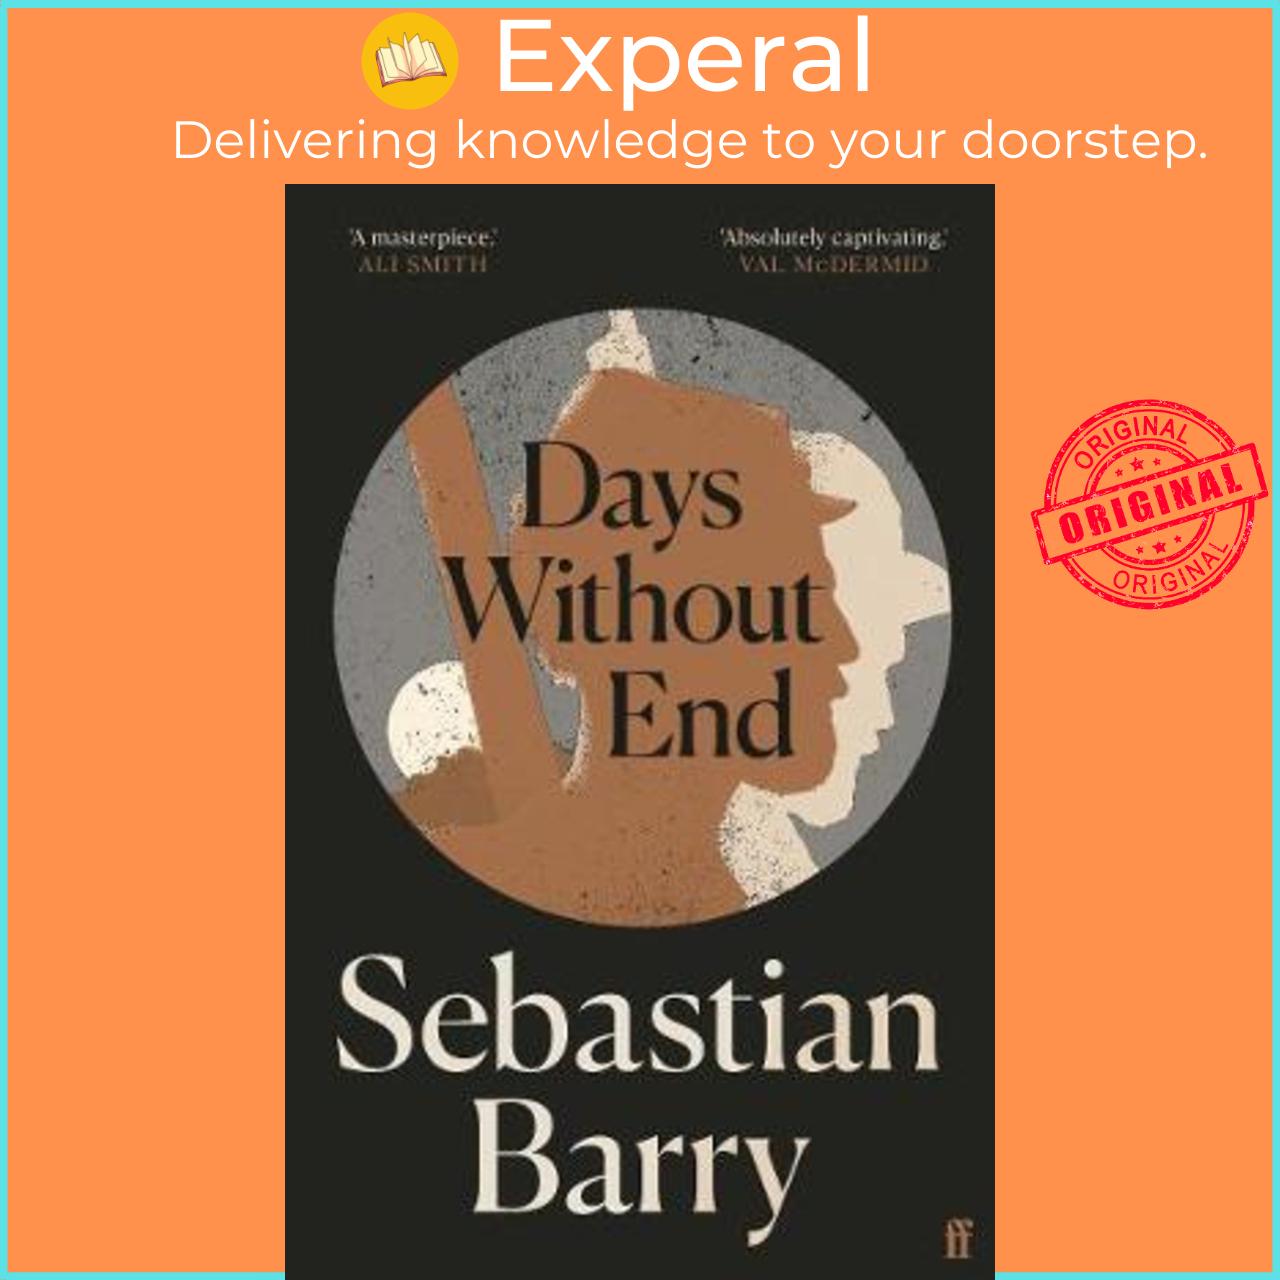 Sách - Days Without End by Sebastian Barry (UK edition, paperback)